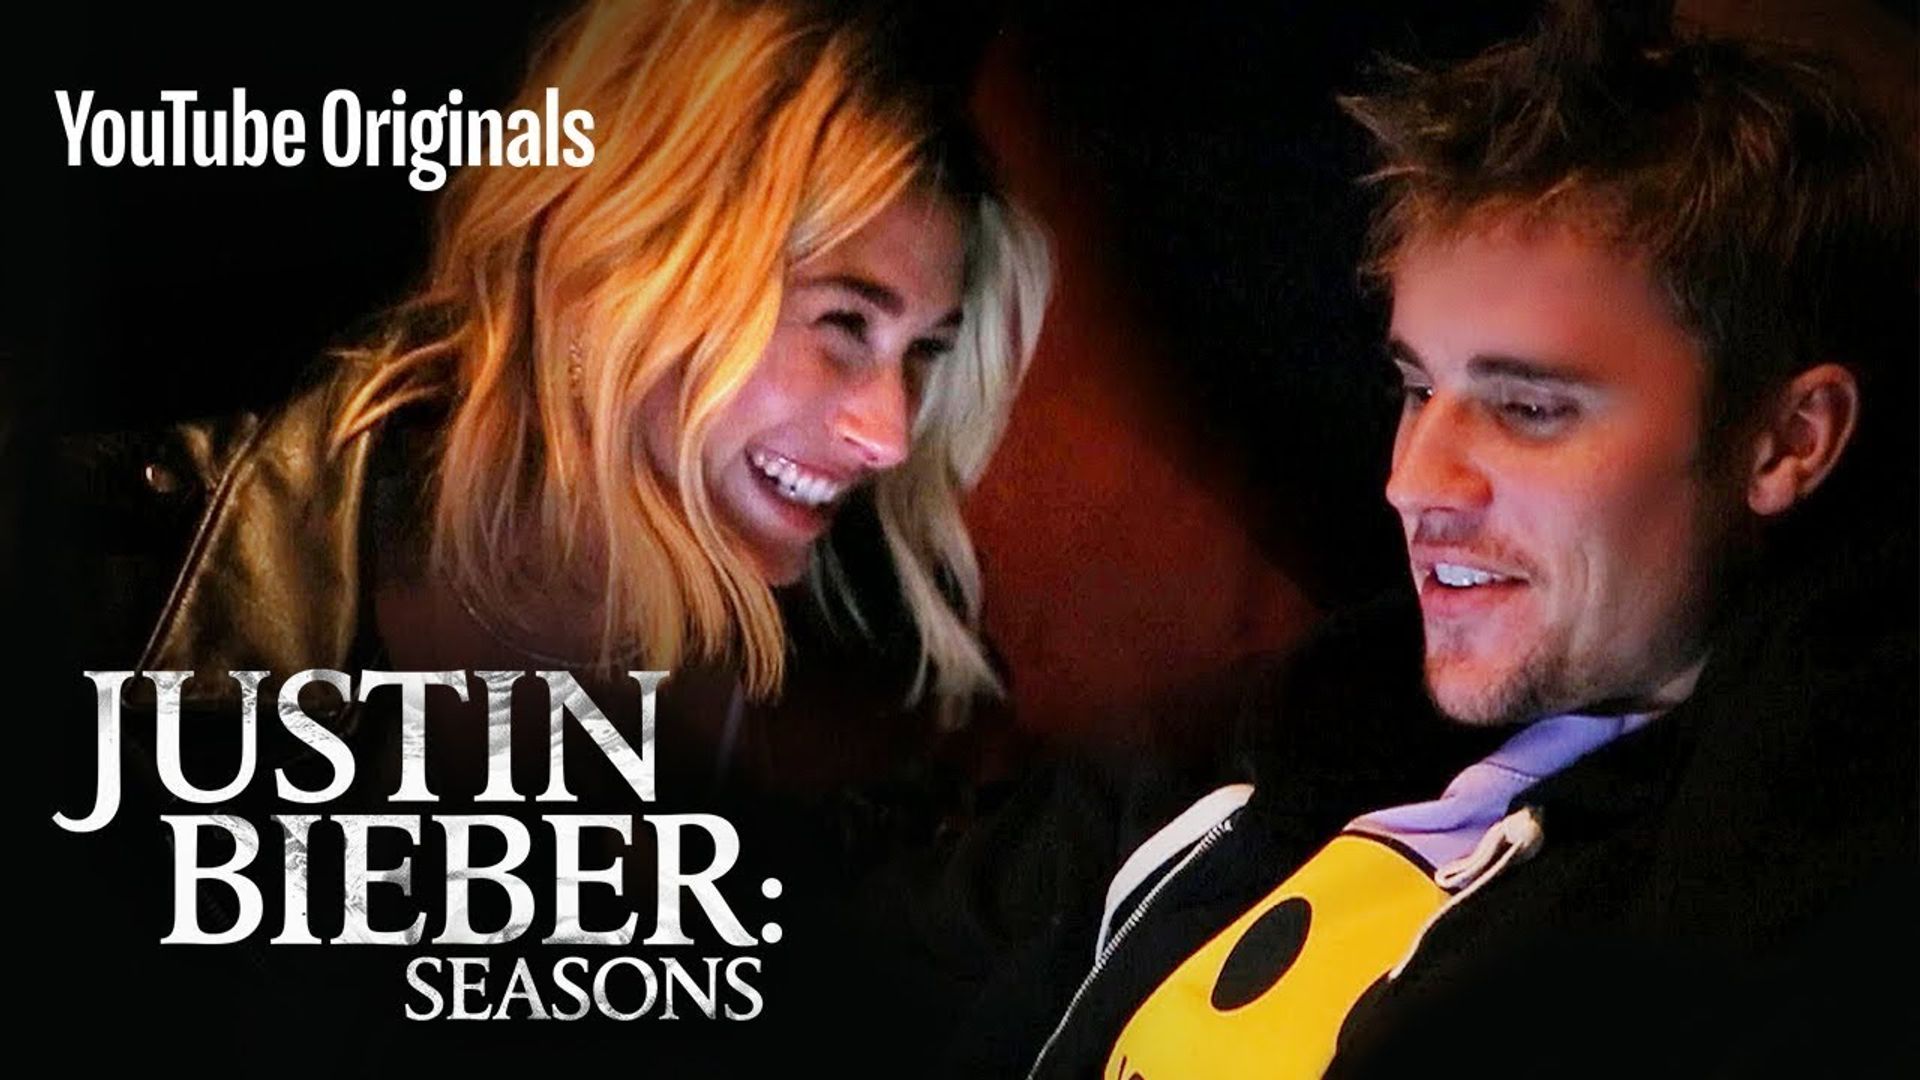 Justin Bieber: Seasons background